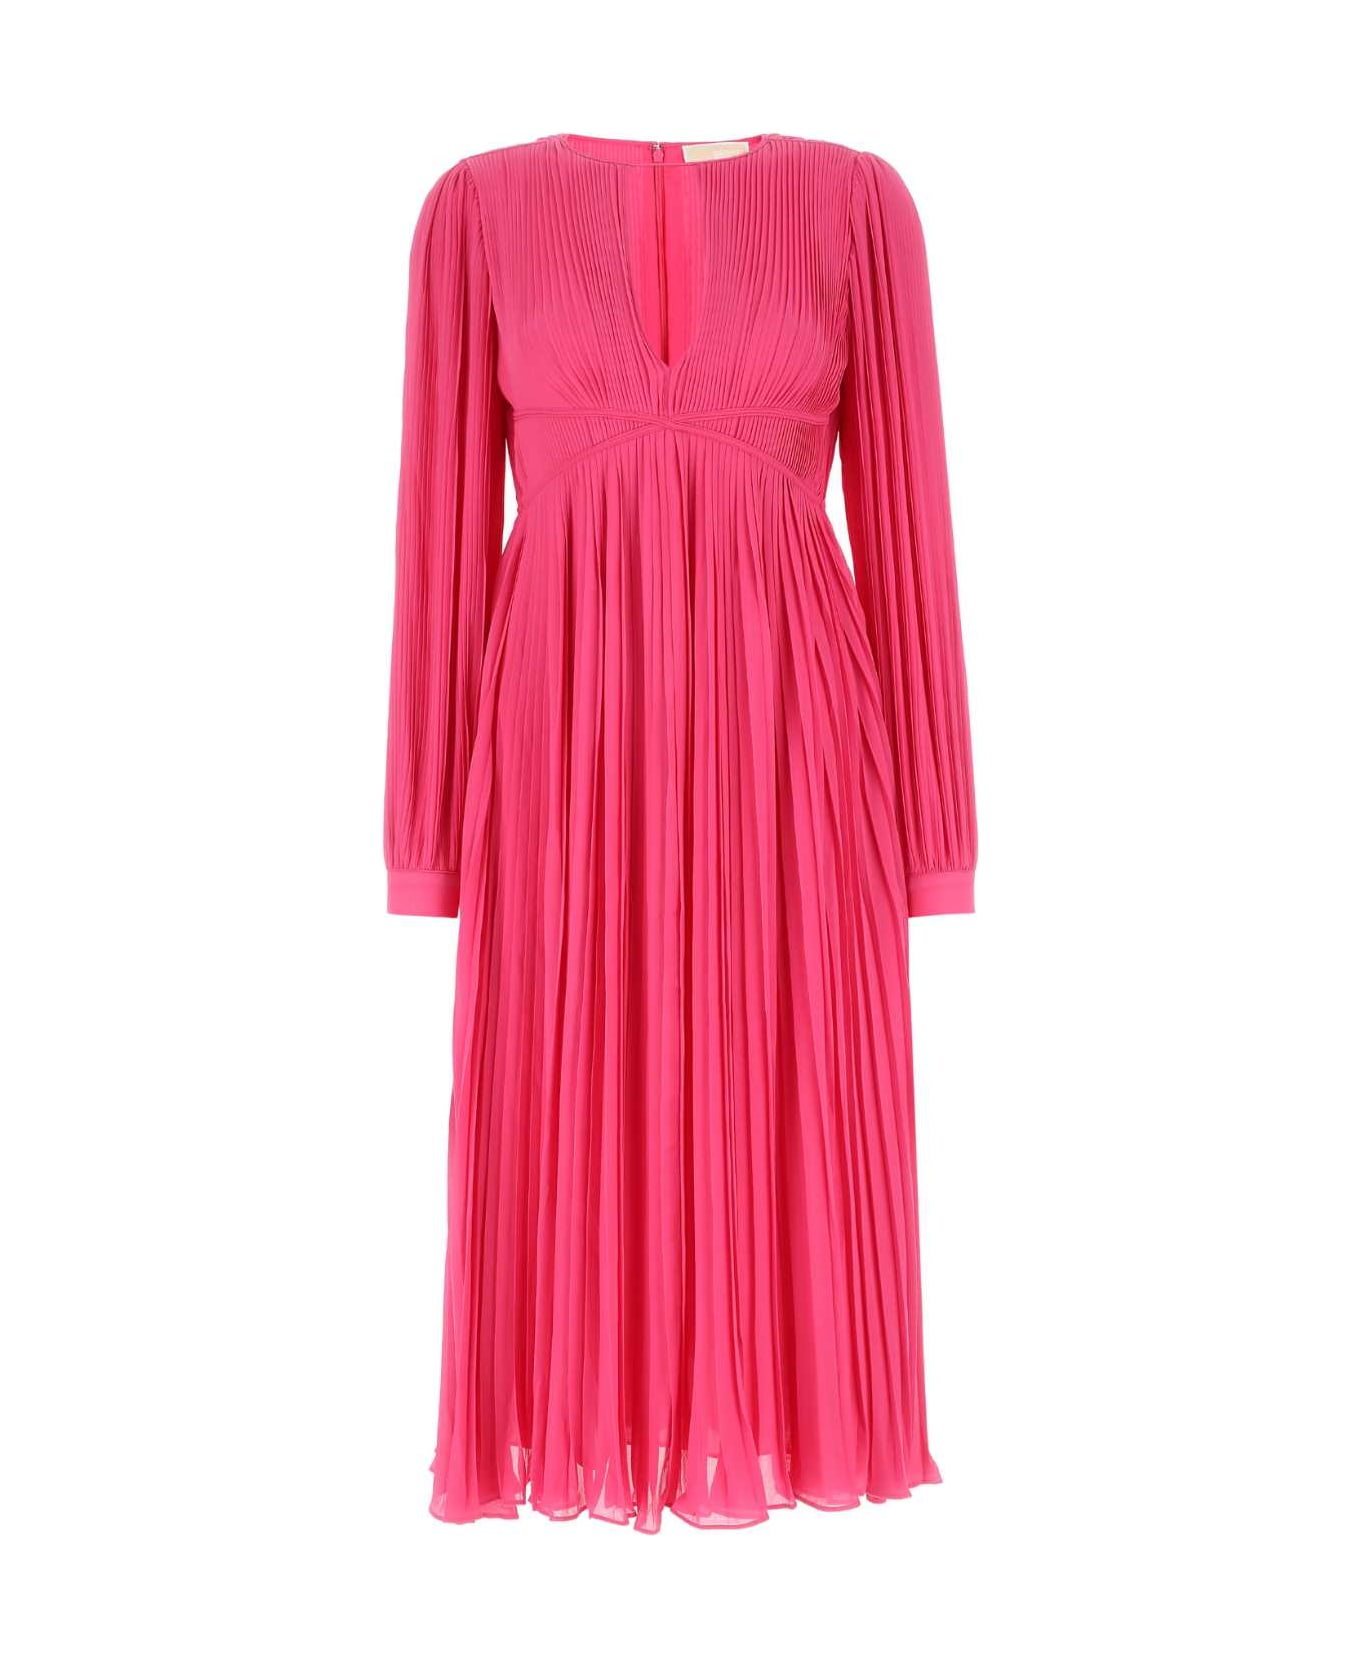 Michael Kors Dark Pink Crepe Dress - CERISE